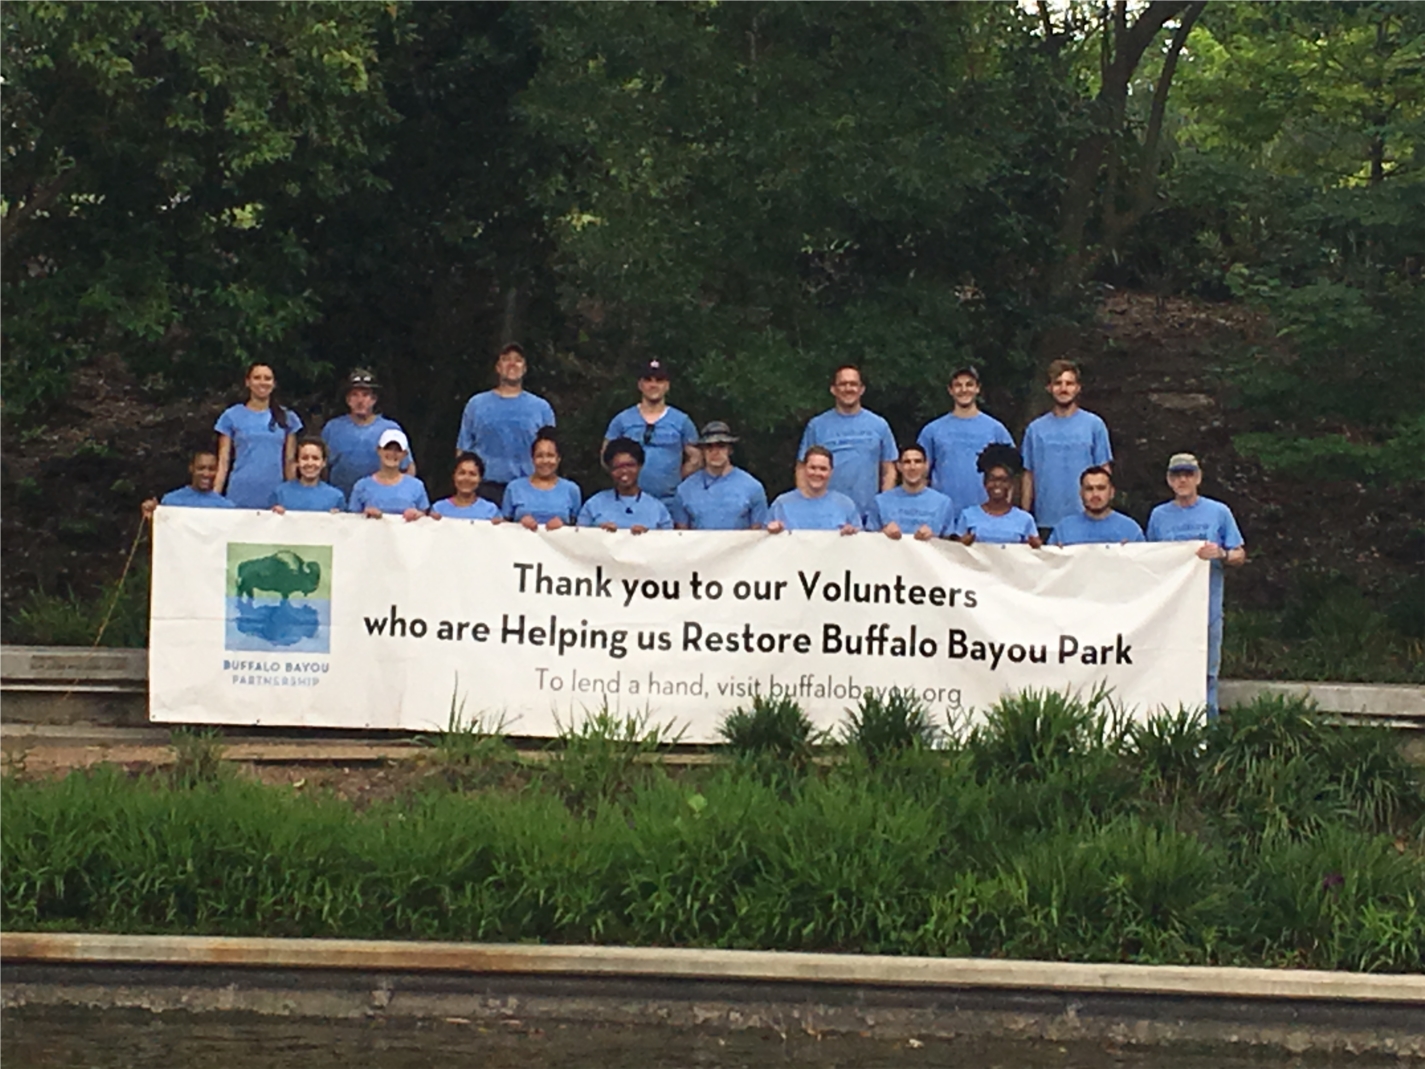 Crossmark employees volunteering with The Buffalo Bayou Partnership